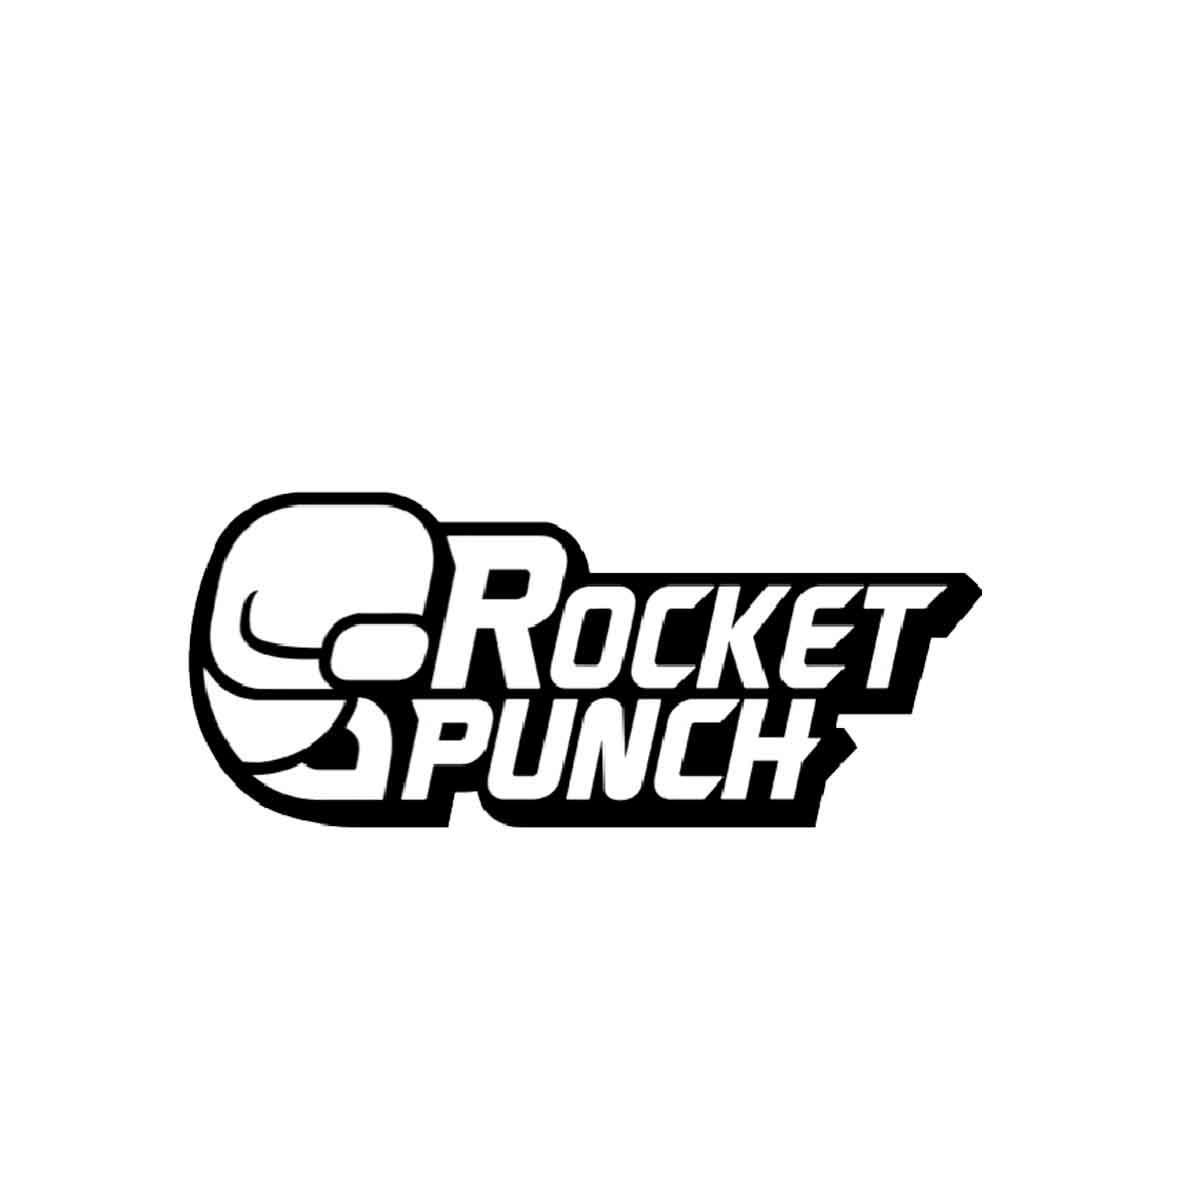 rocket punch